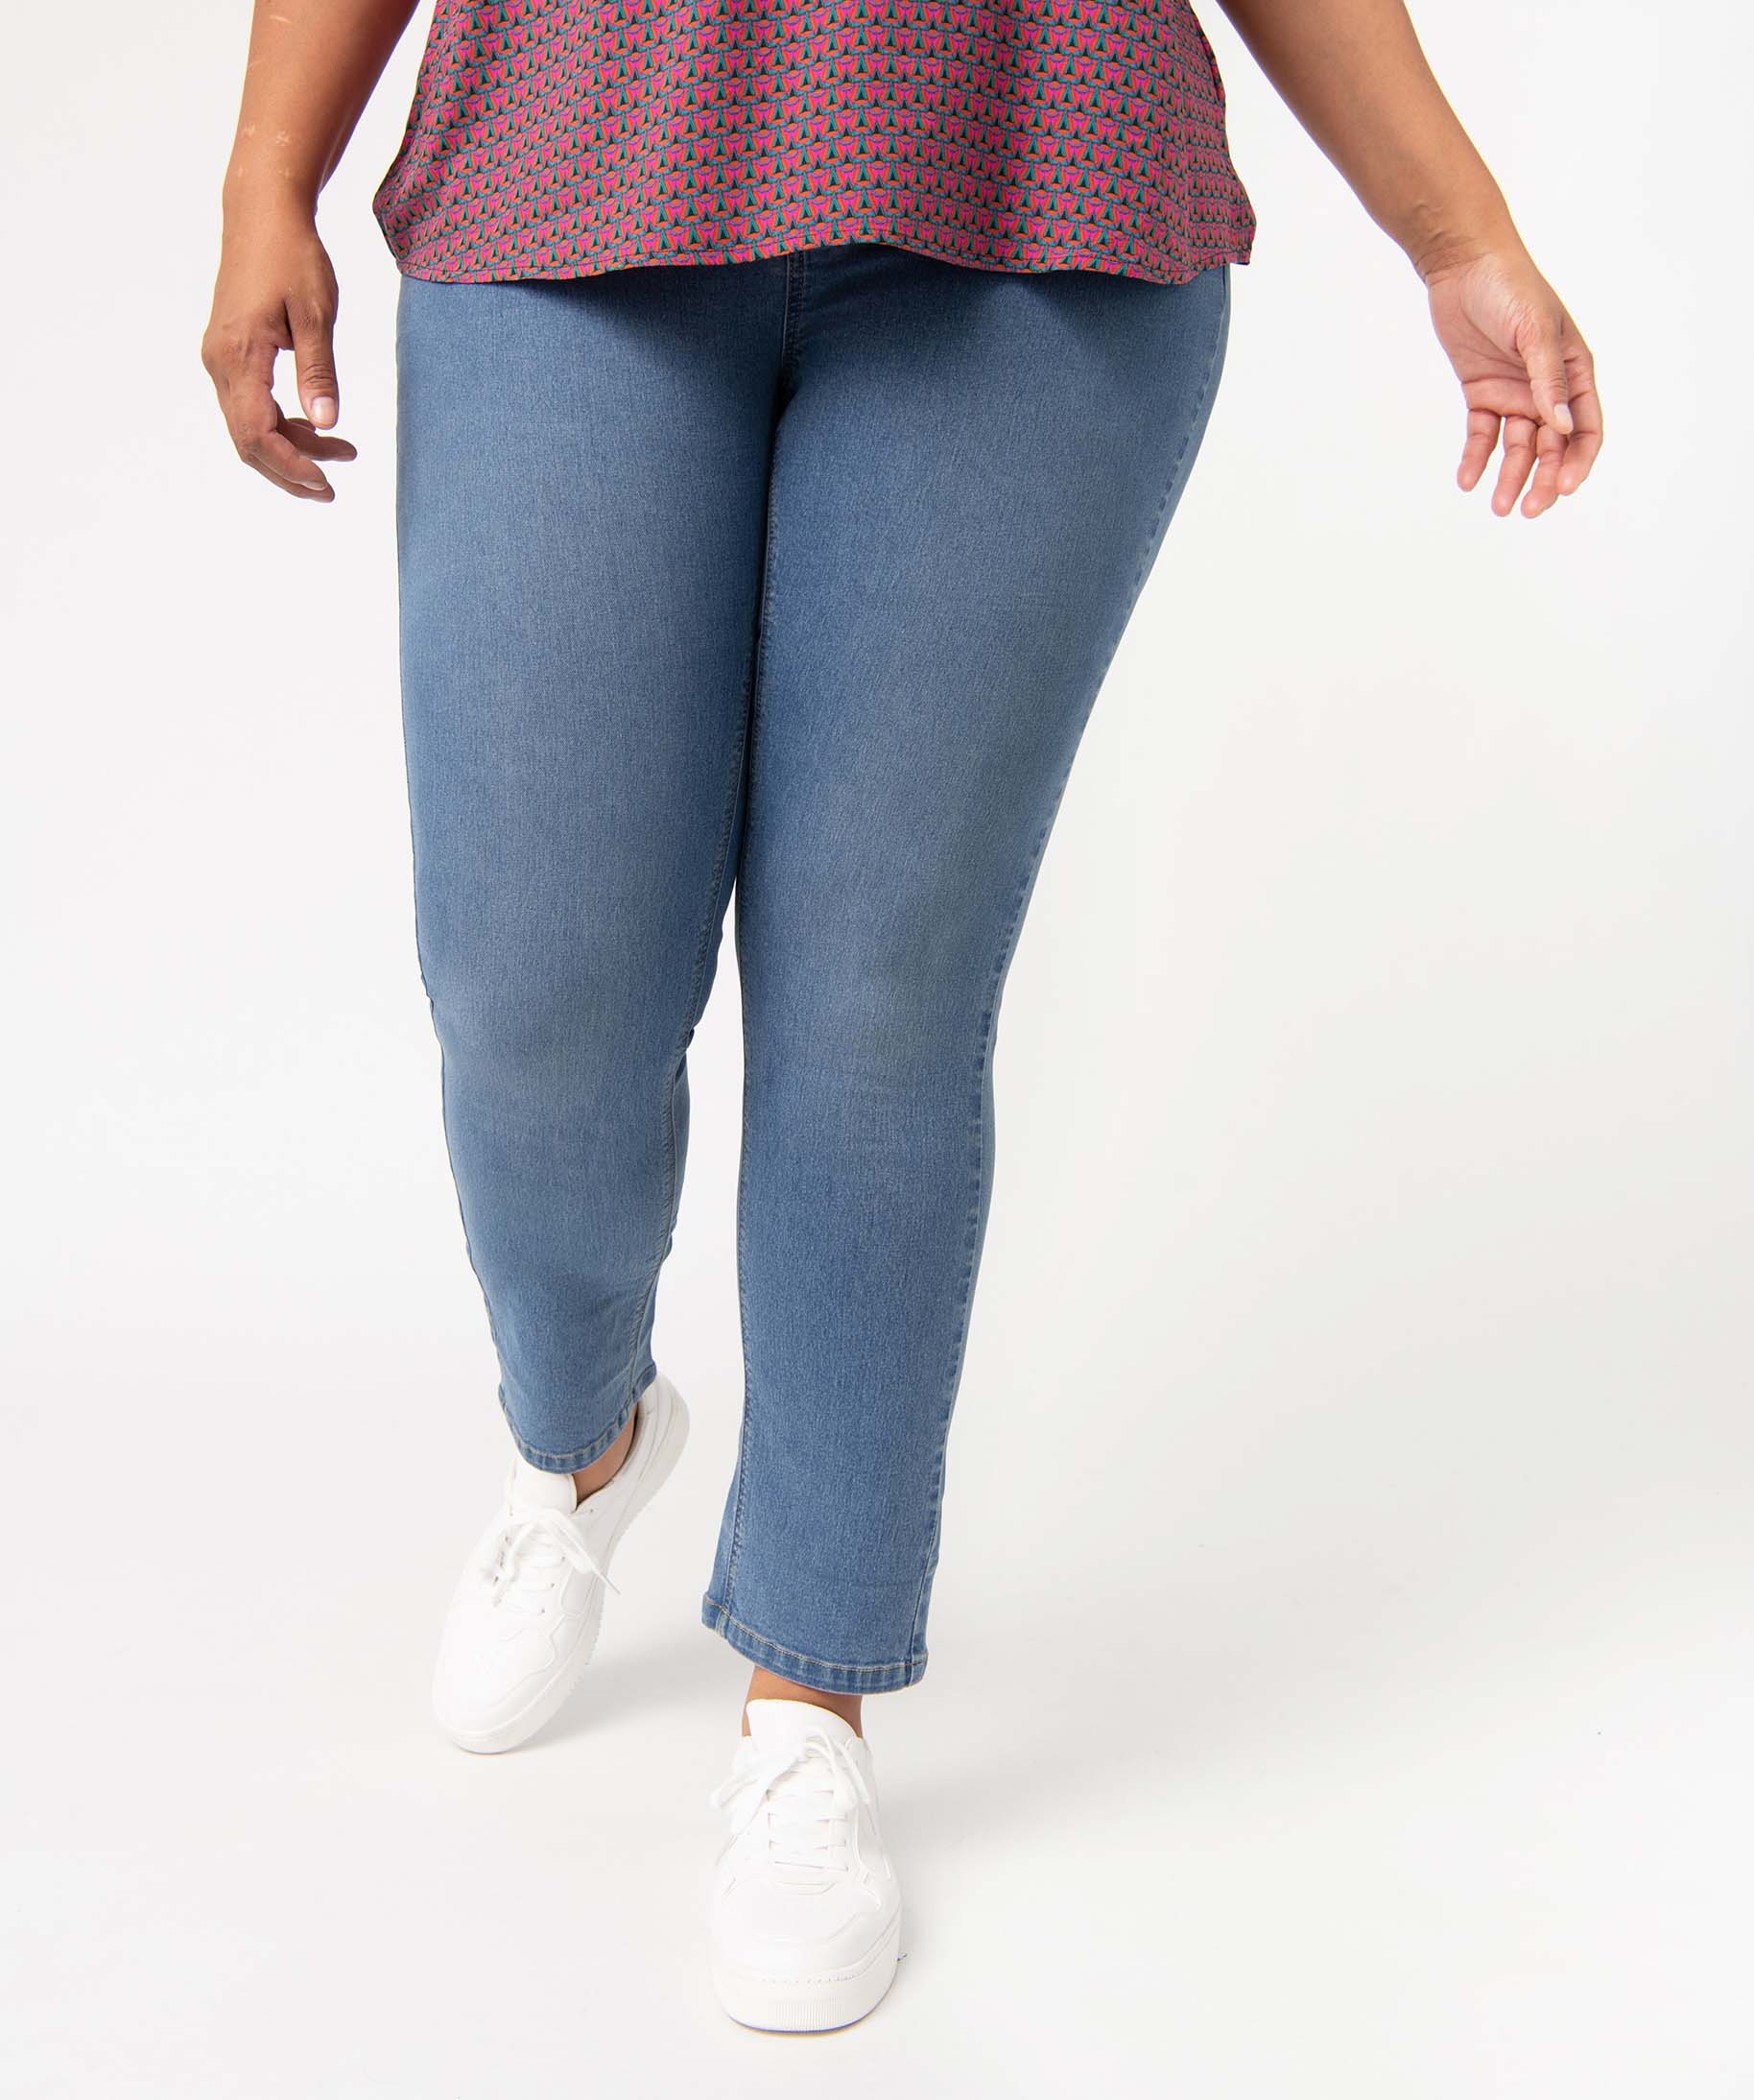 jean femme grande taille coupe regular delave gris pantalons et jeans